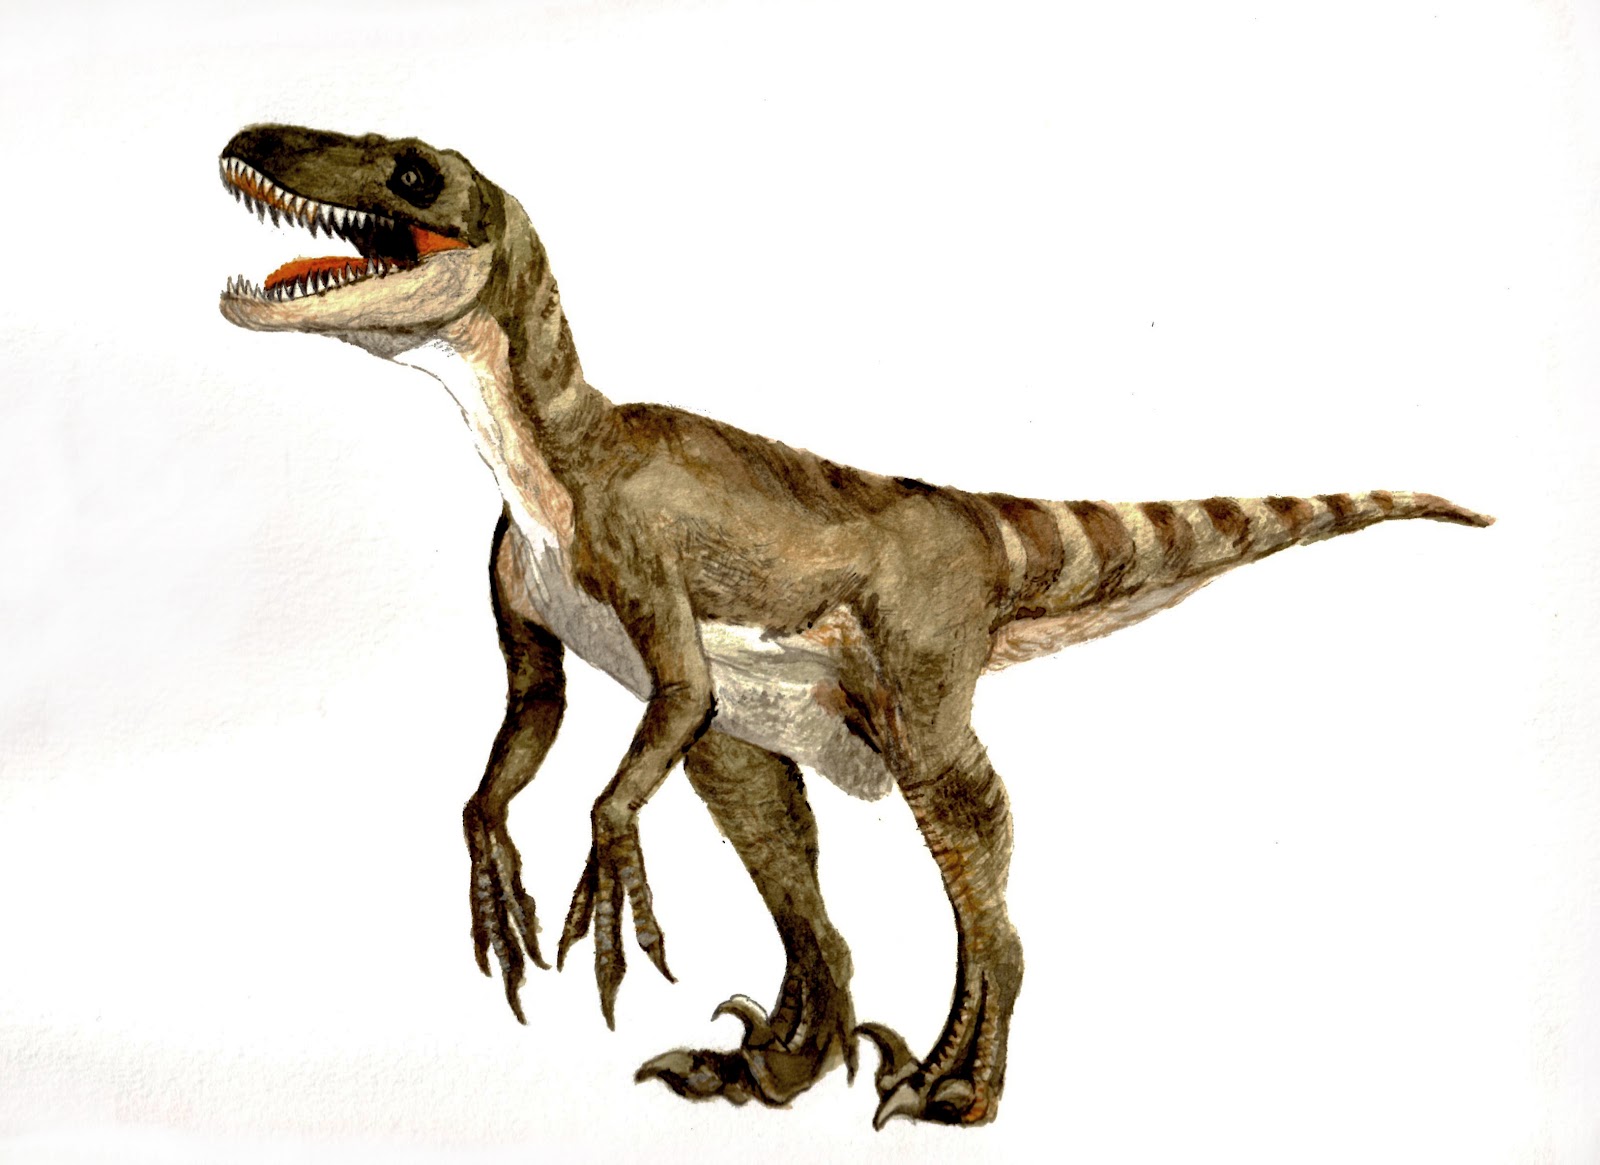 velociraptor2